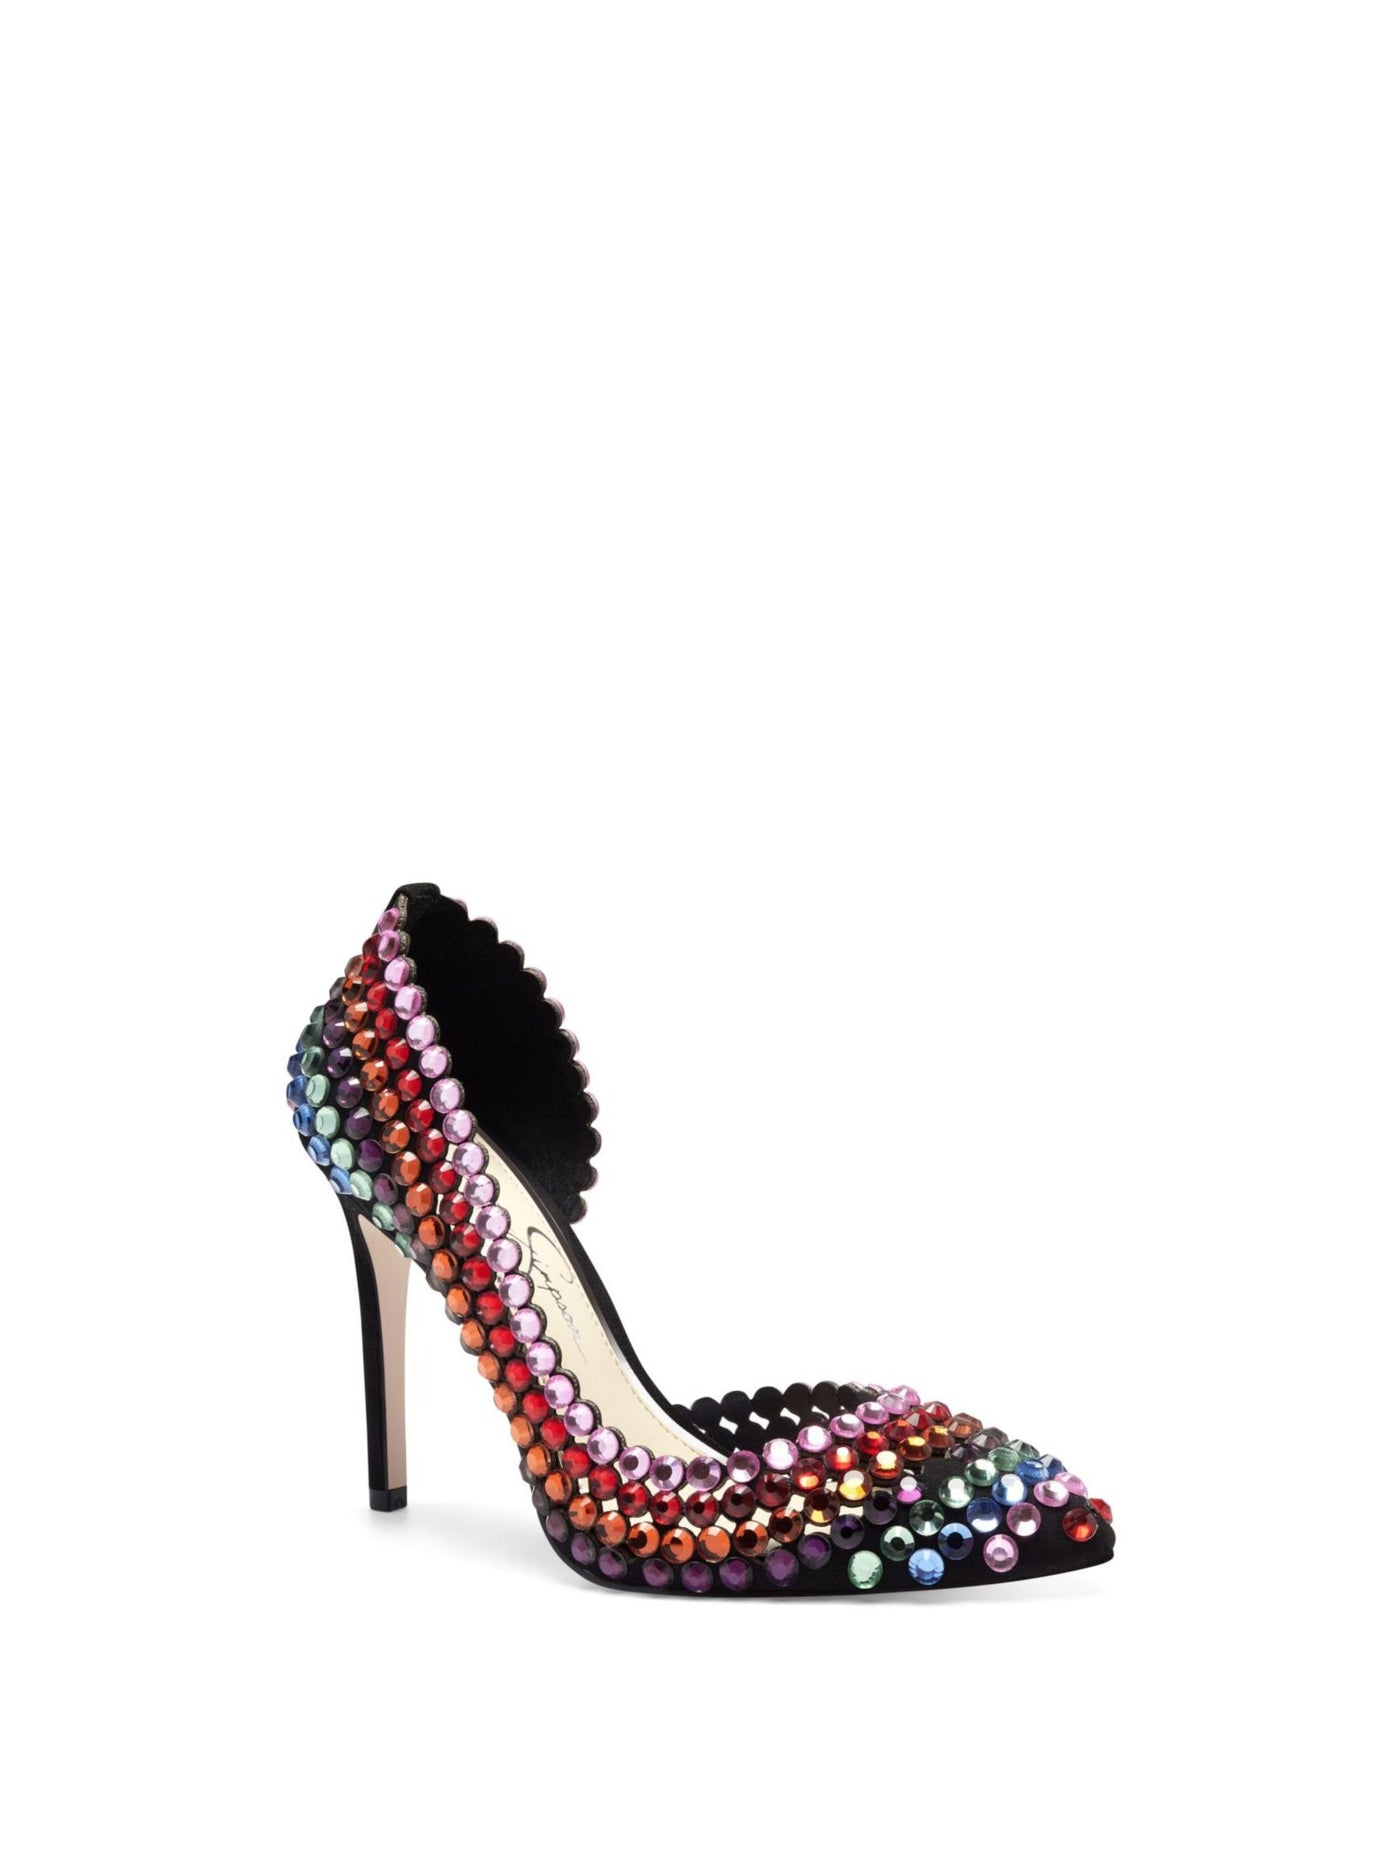 JESSICA SIMPSON Womens Black Rainbow Faux Jewels D Orsay Comfort Preppi Pointed Toe Stiletto Slip On Pumps Shoes 5 M